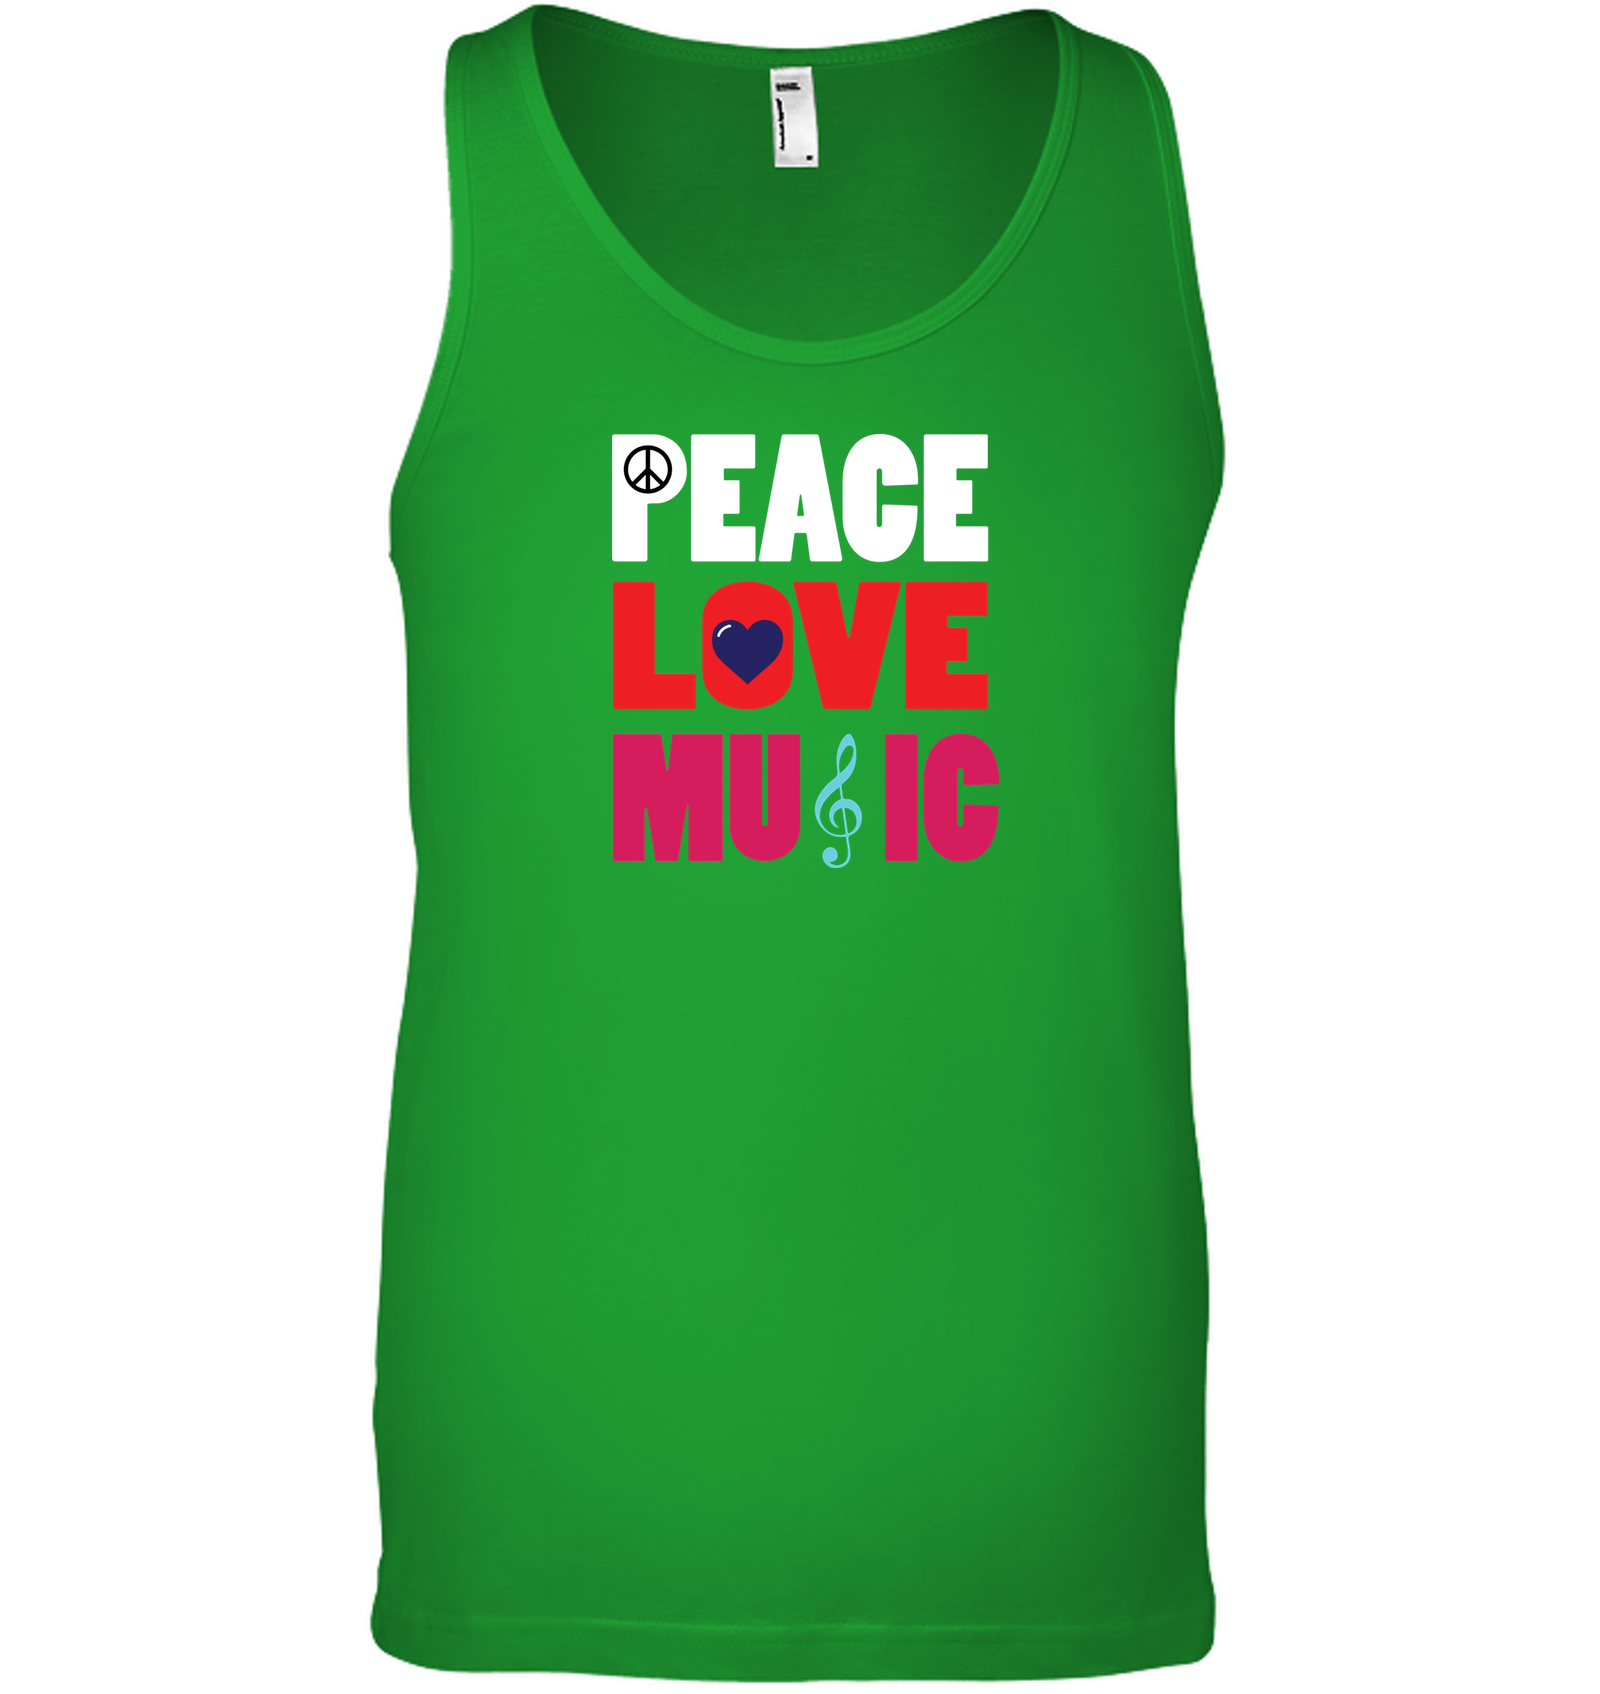 Peace Love Music - Bella + Canvas Unisex Jersey Tank